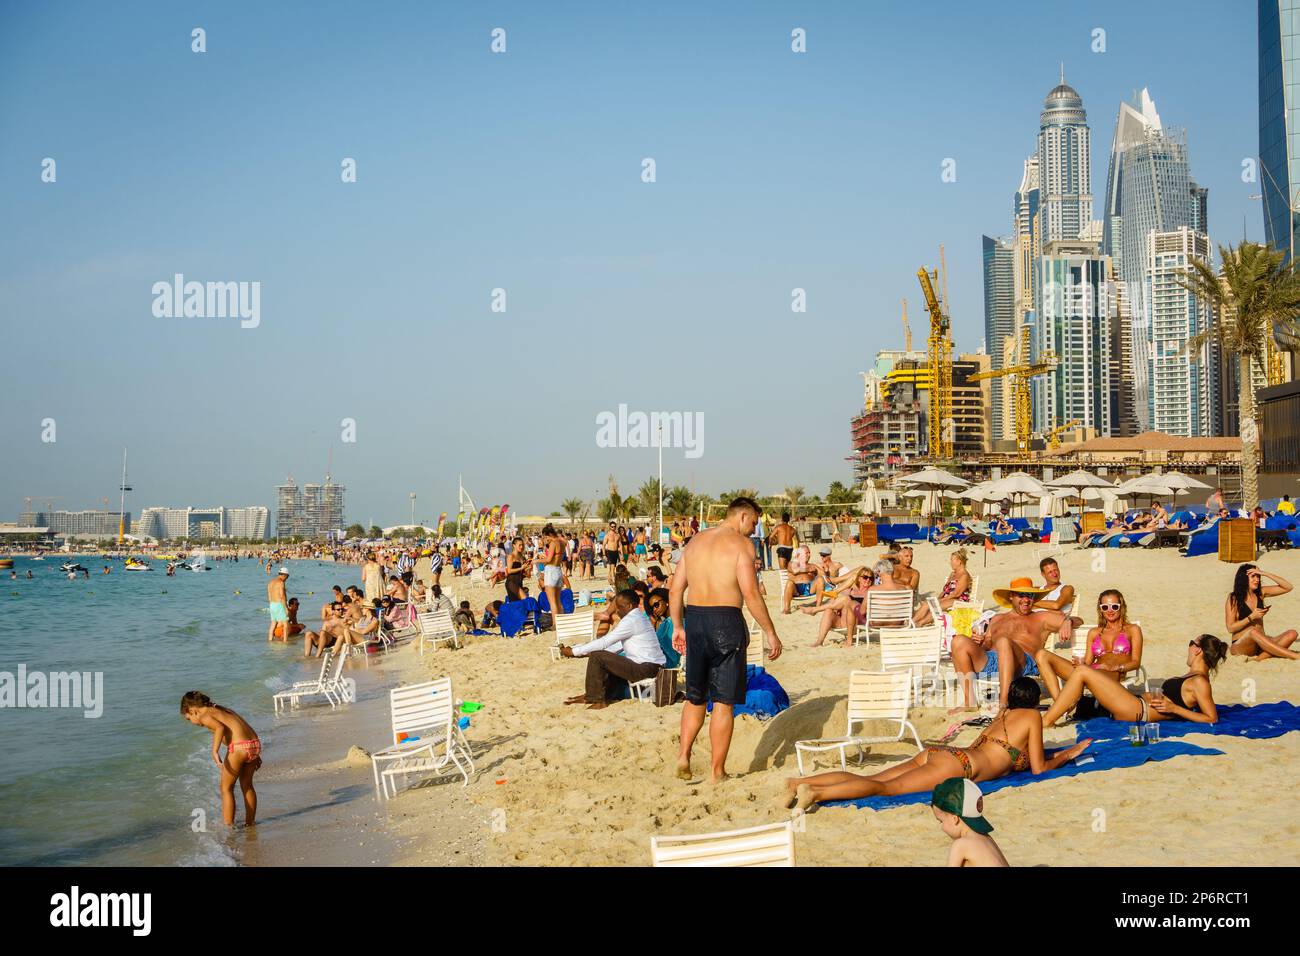 Dubai, UAE, February 23, 2018: Crowded beach at Jumeirah Beach Residence in Dubai, UAE Stock Photo